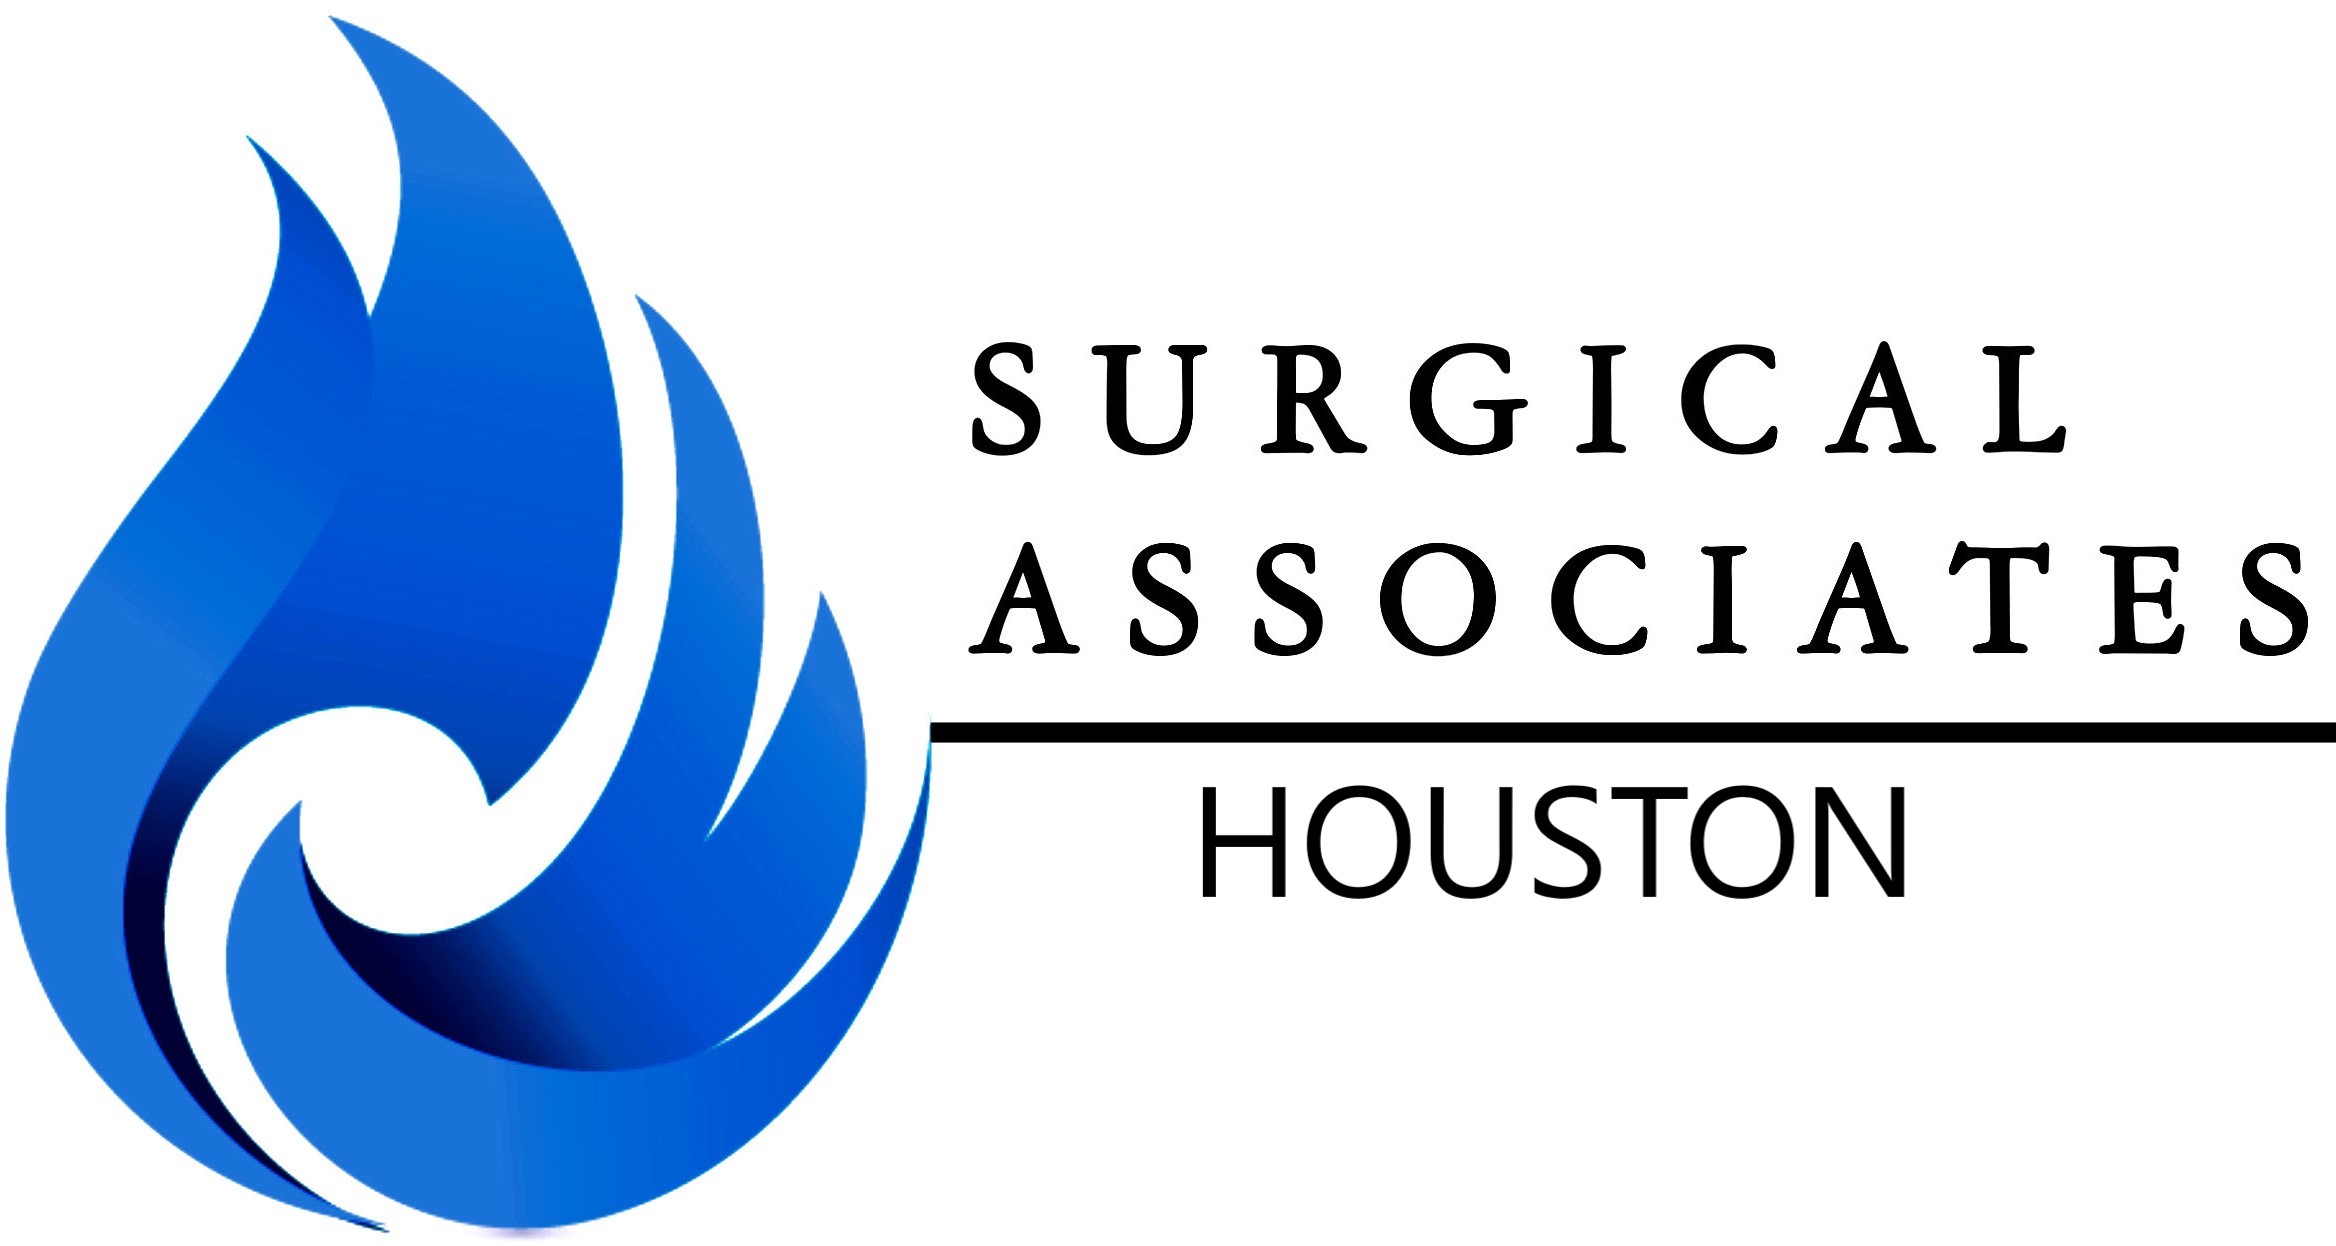 Surgical Associates of Houston